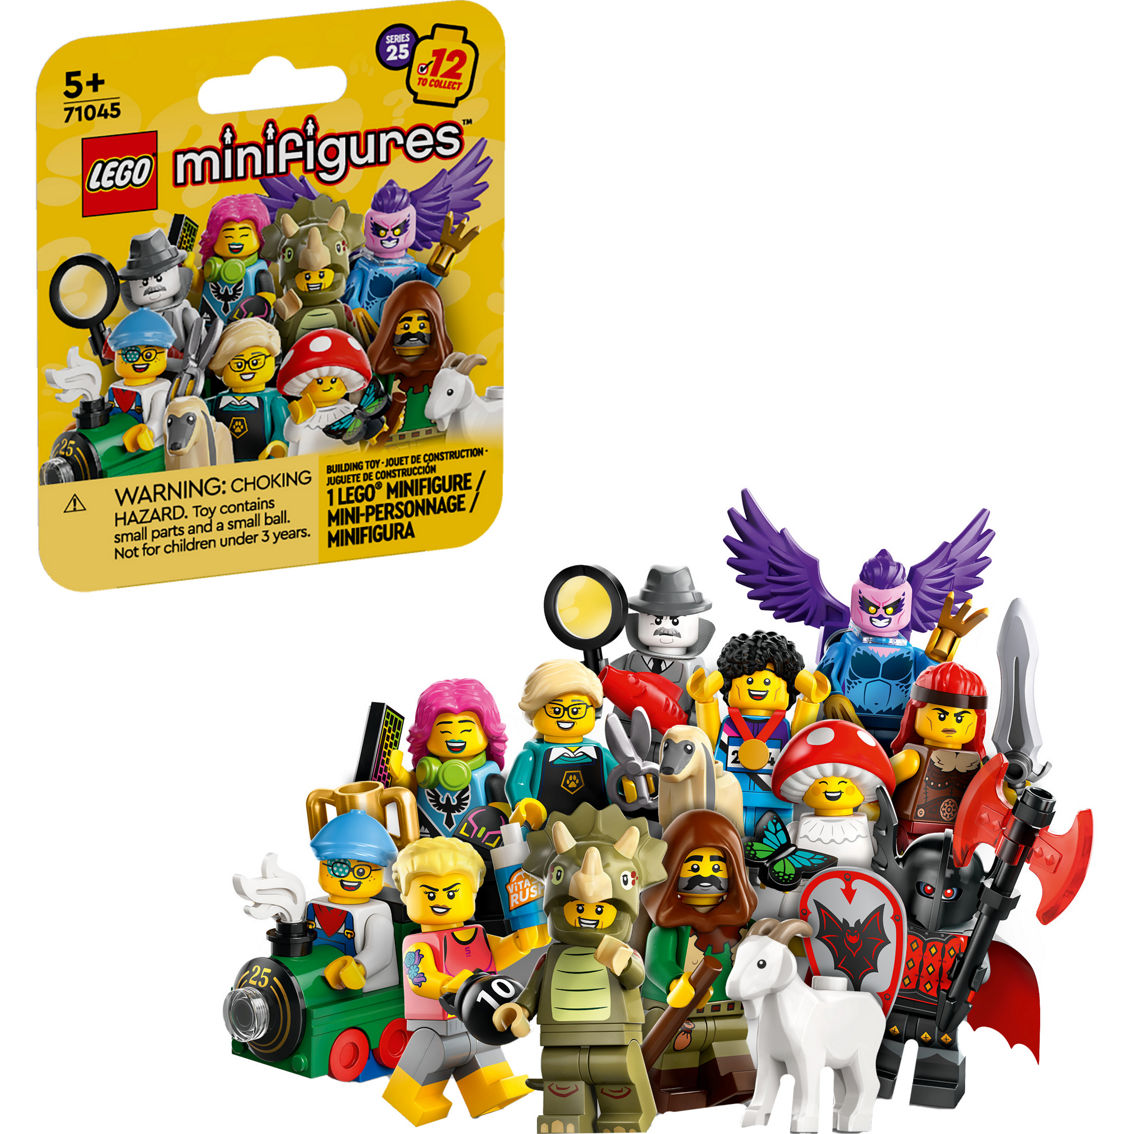 LEGO Minifigures Series 25 71045 - Image 3 of 6